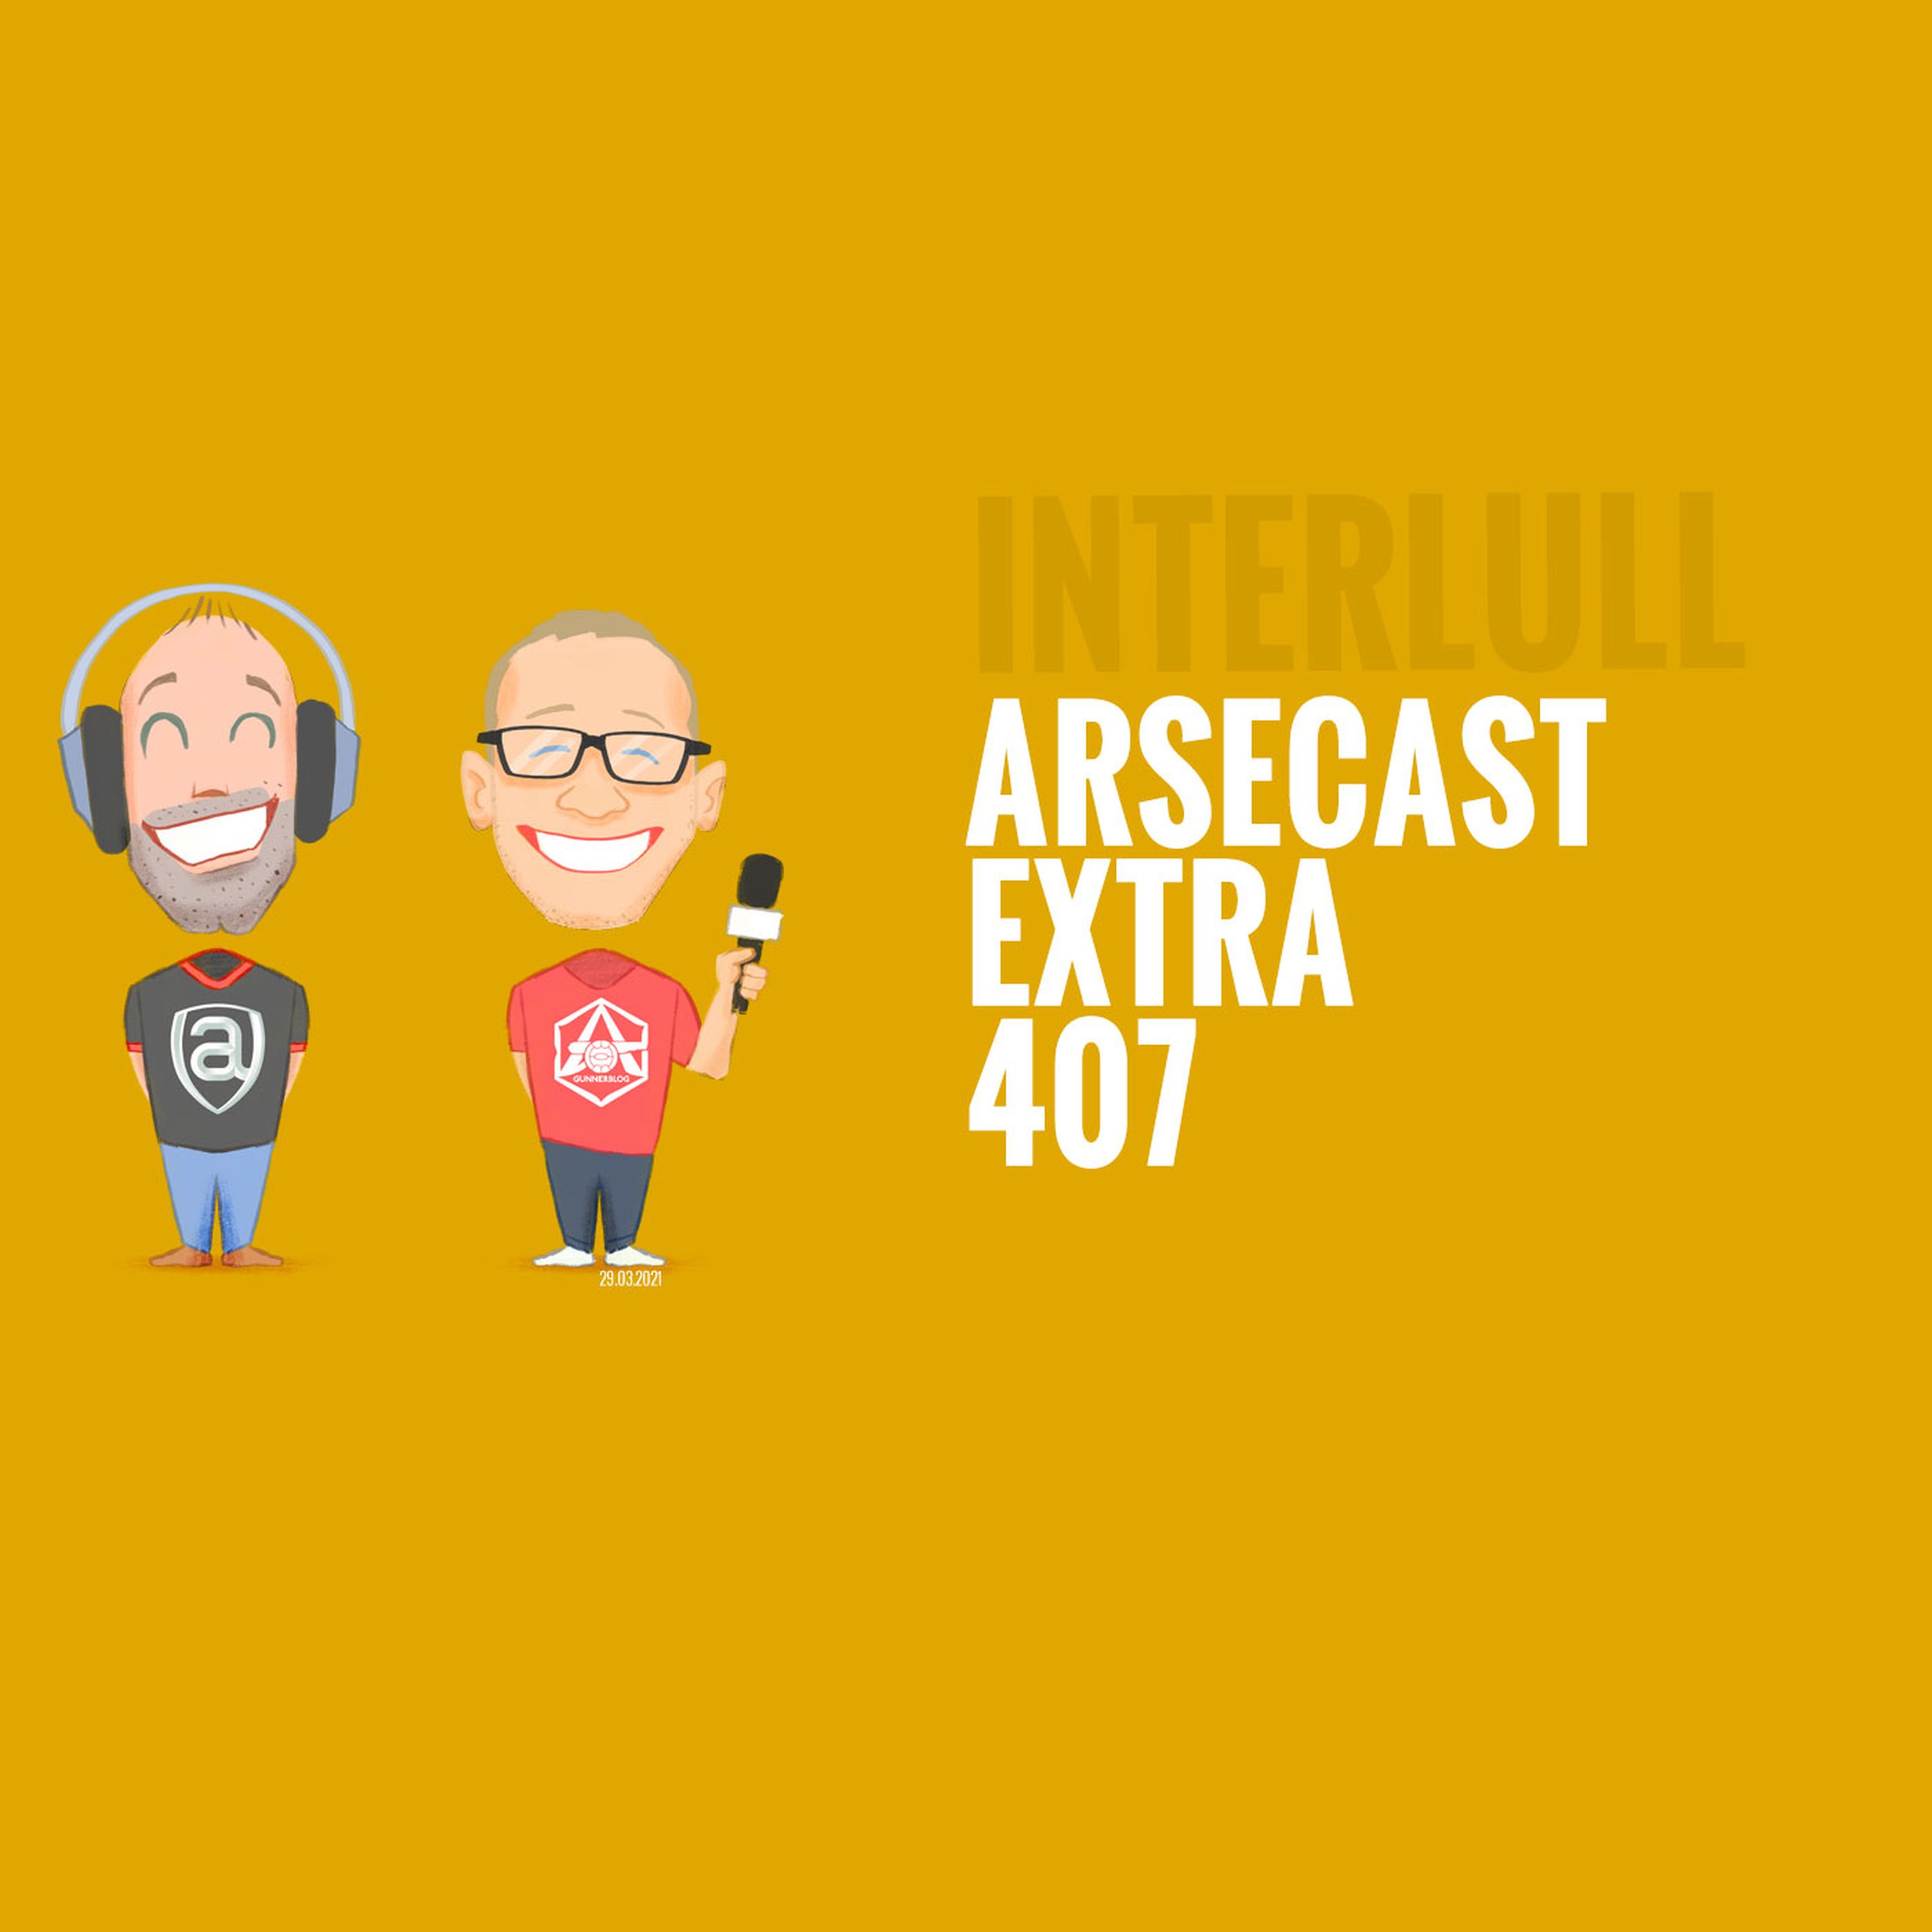 Arsecast Extra Episode 407 - 29.03.2021